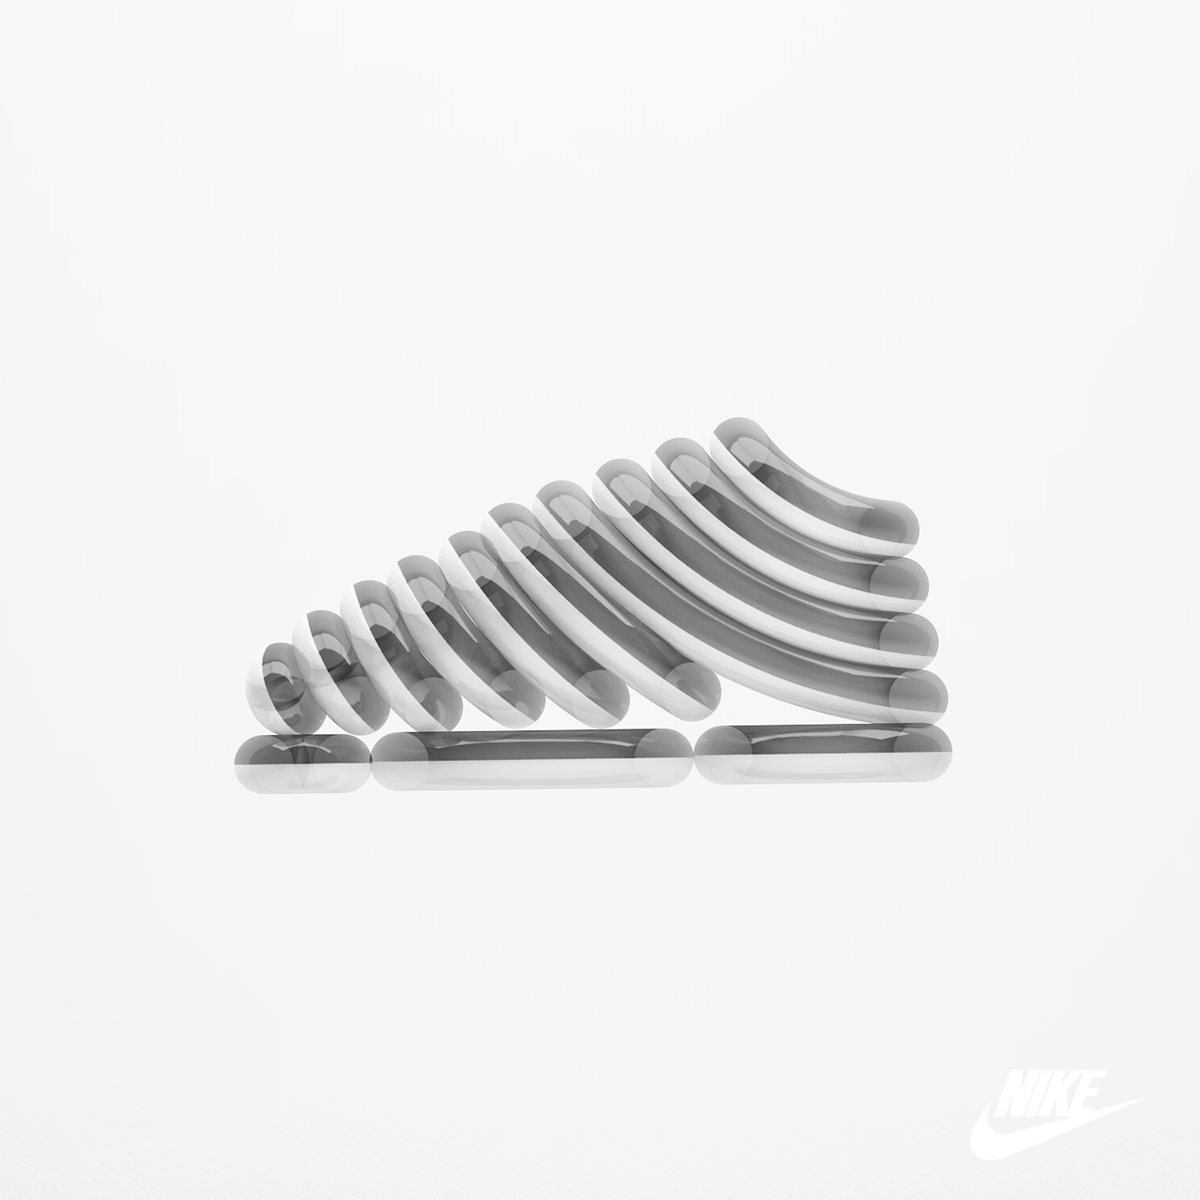 Nike shoes graphism Cinema brand Fun joy 3D